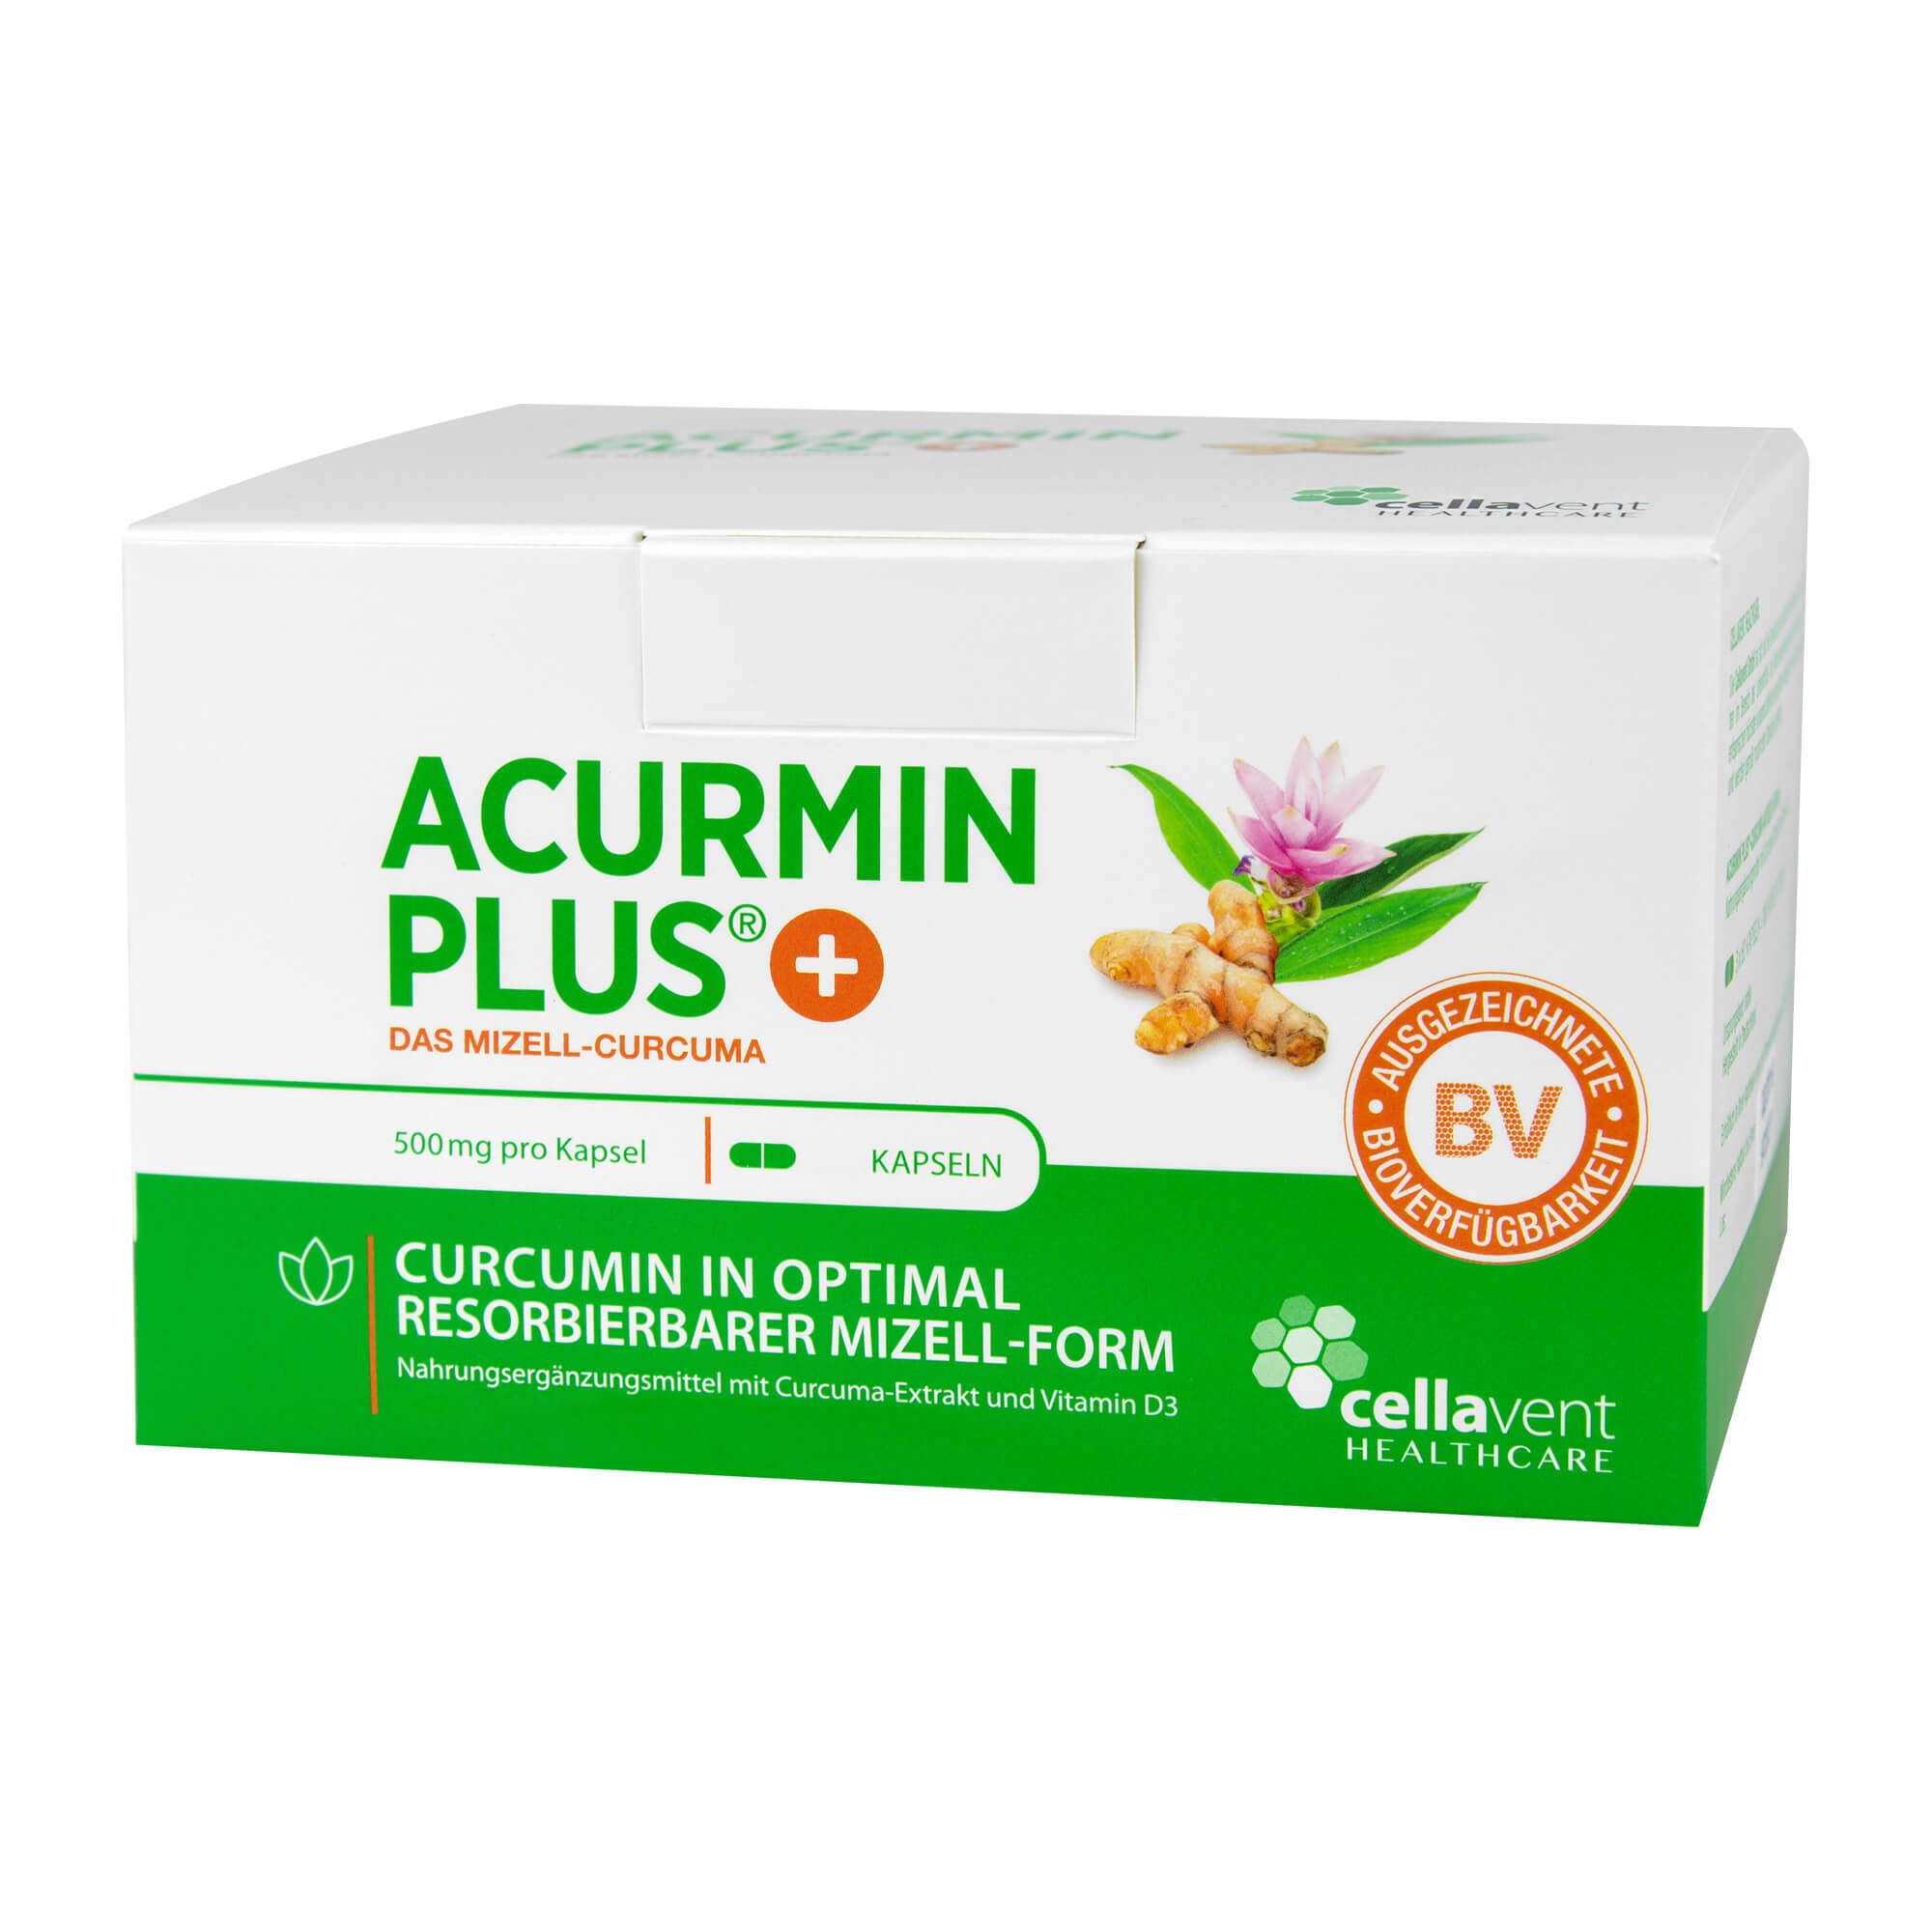 Nährungsergänzungsmittel mit Curcuma-Extrakt und Vitamin D3.